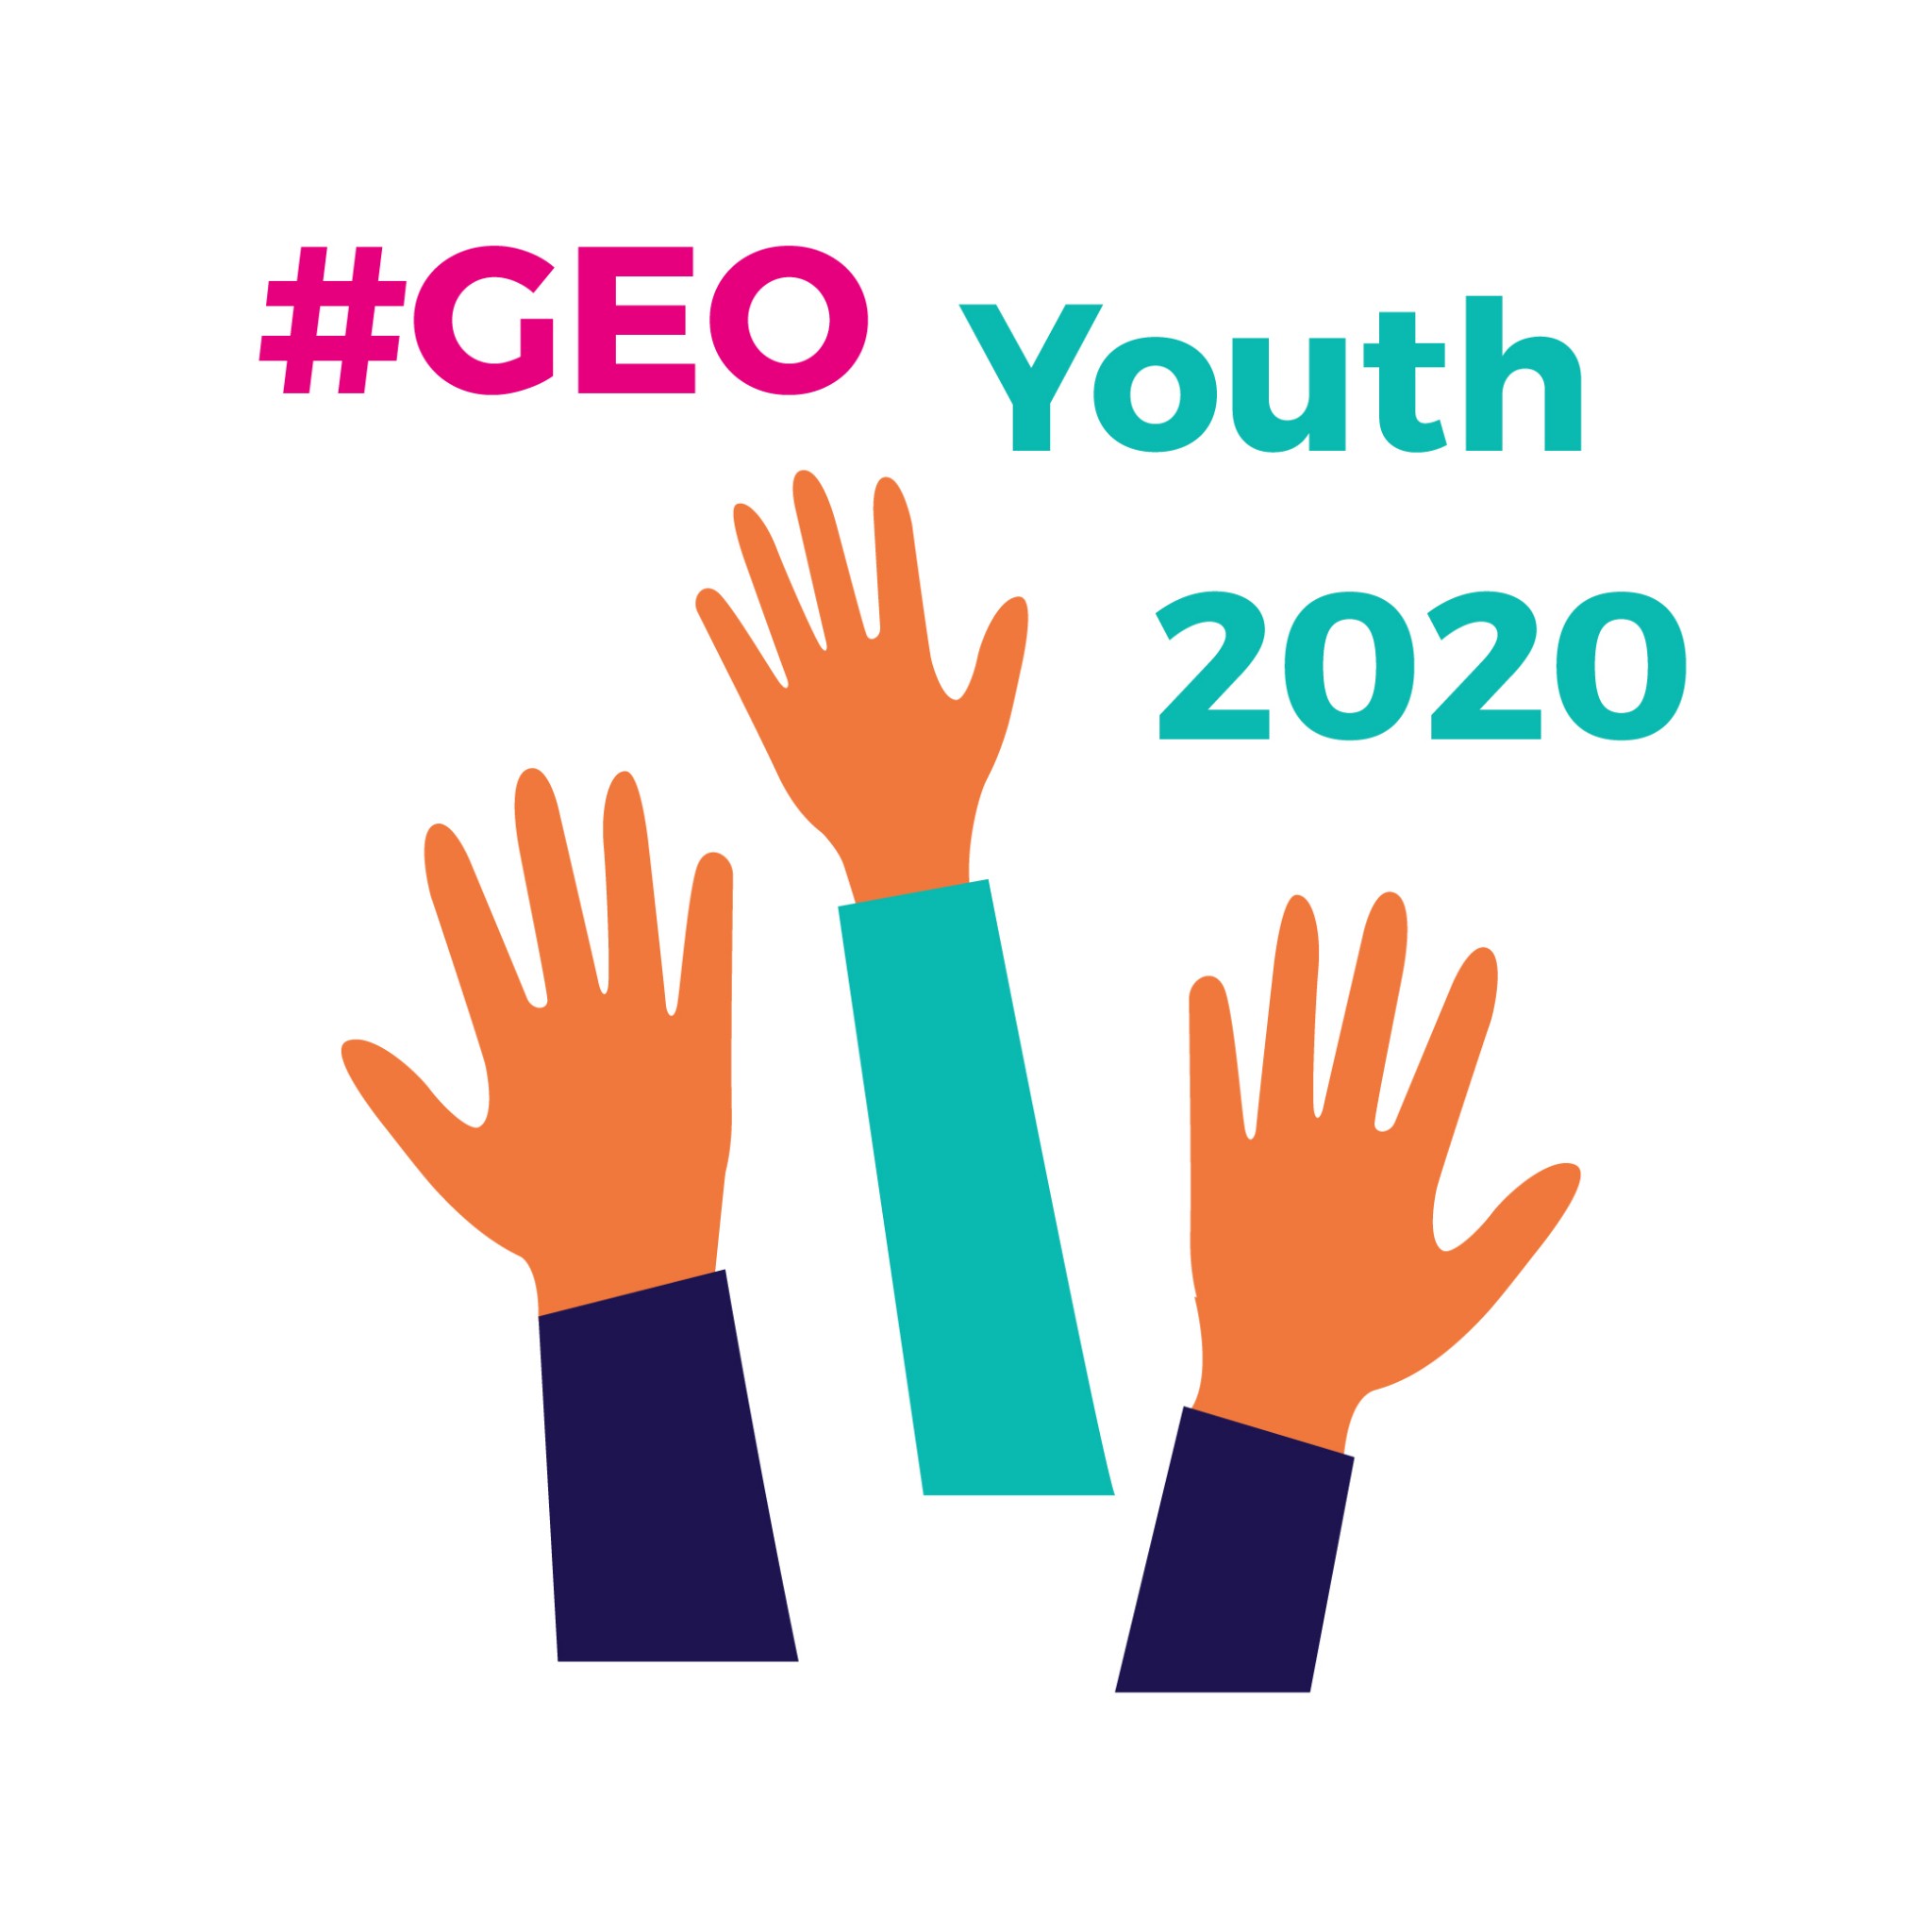 GEOYOUTH2020 - Manifesto Engaging Youth in Politics in Georgia